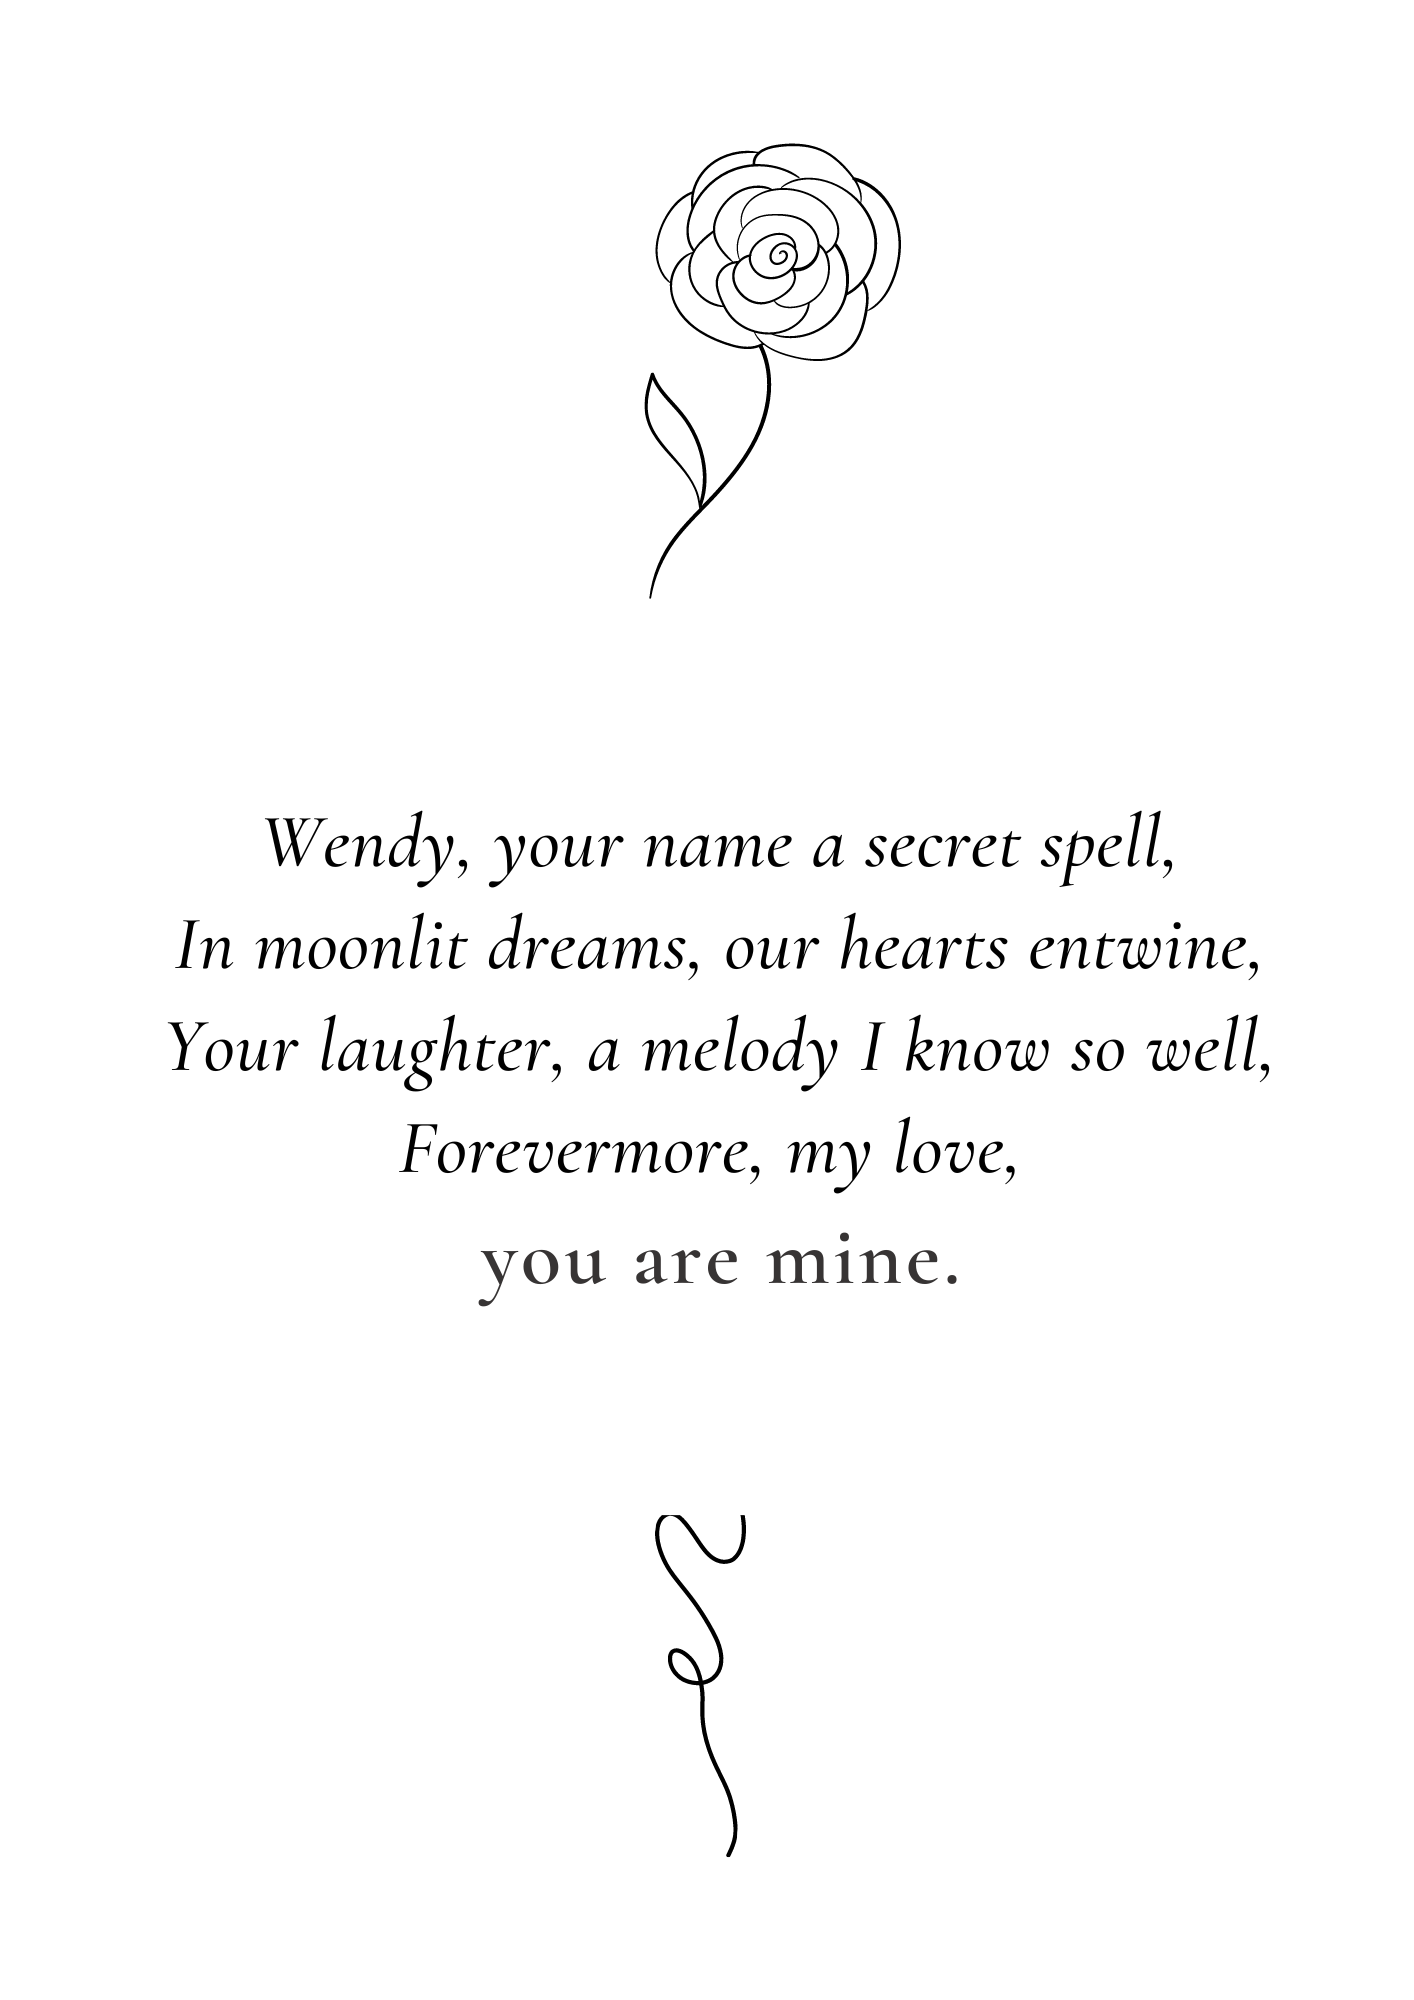 love poem generated using AI poem generator